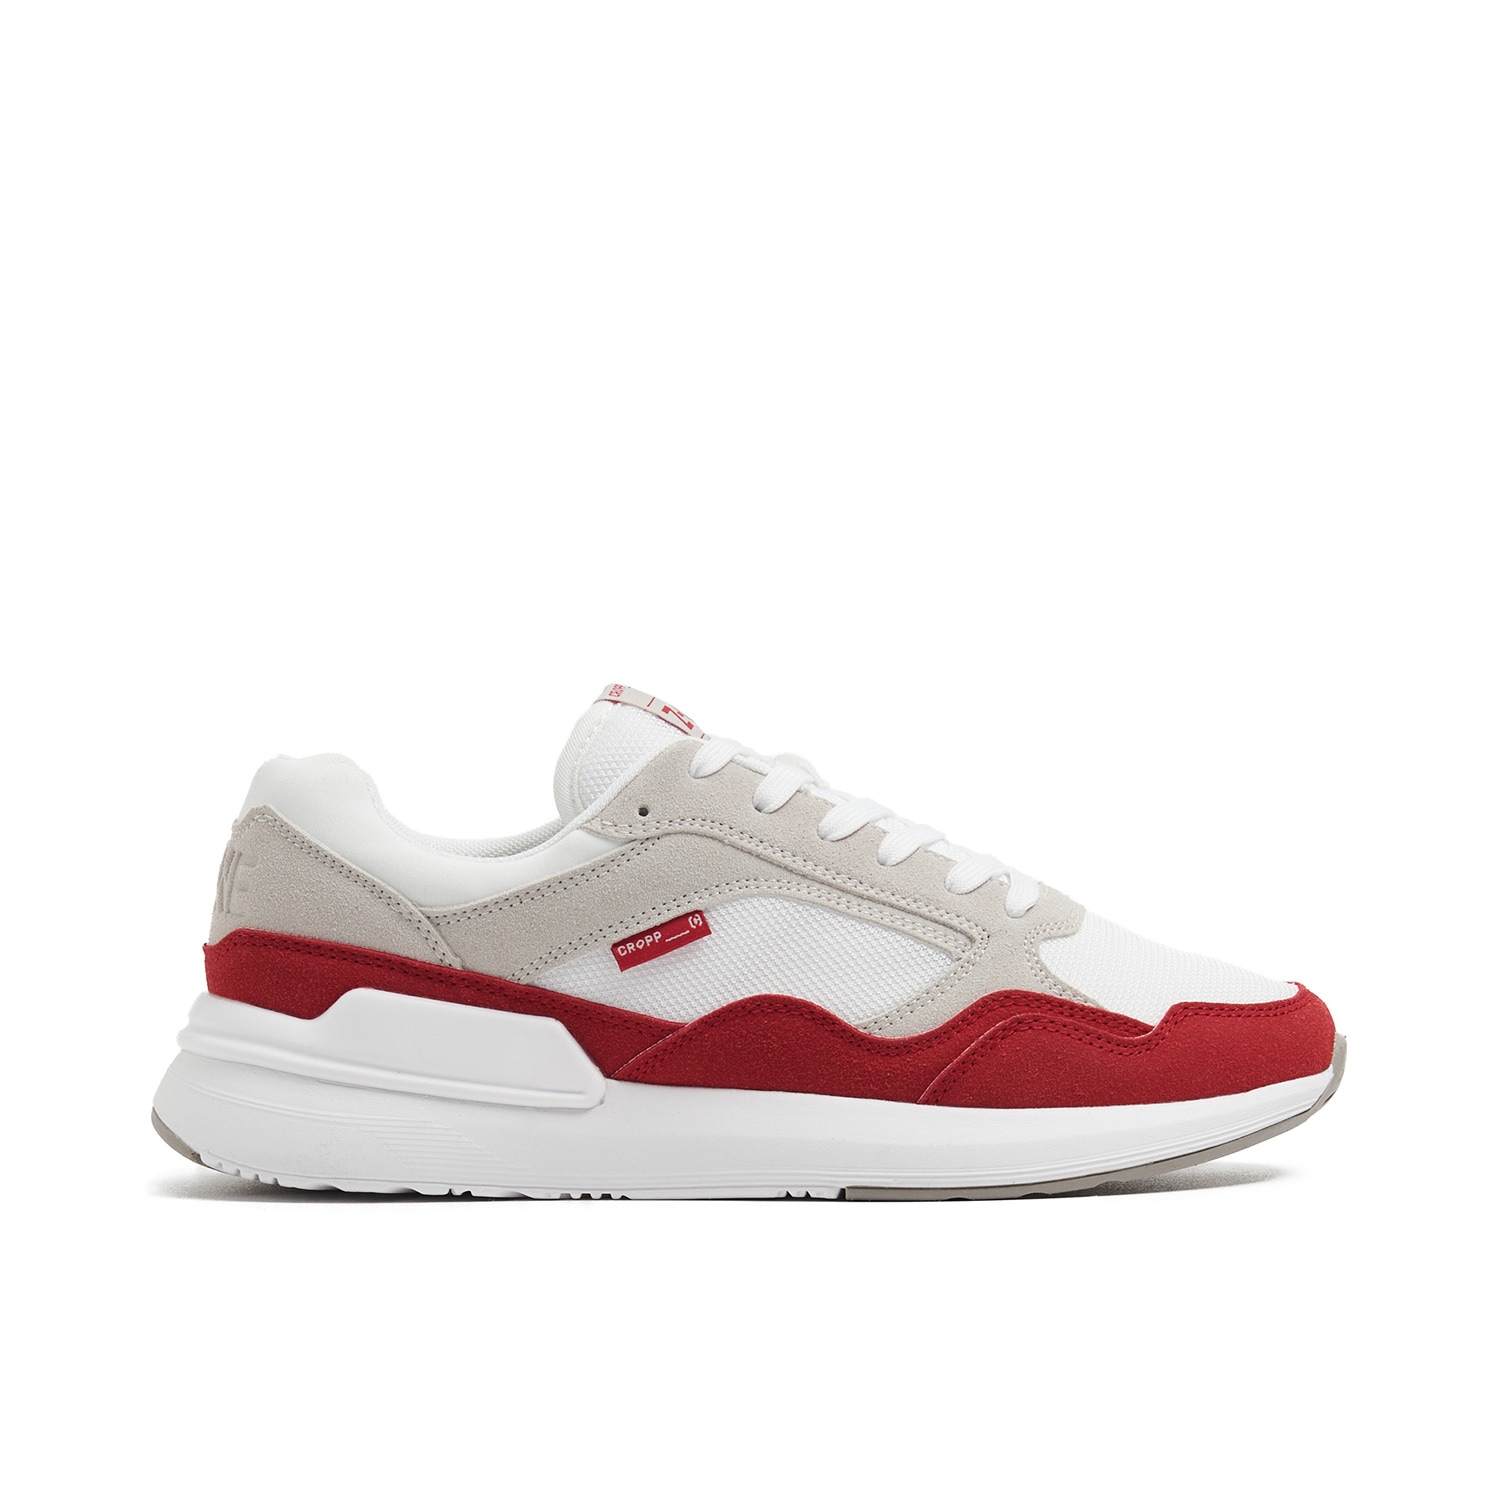 E-shop Cropp - Tenisky typu sneakers - Červená